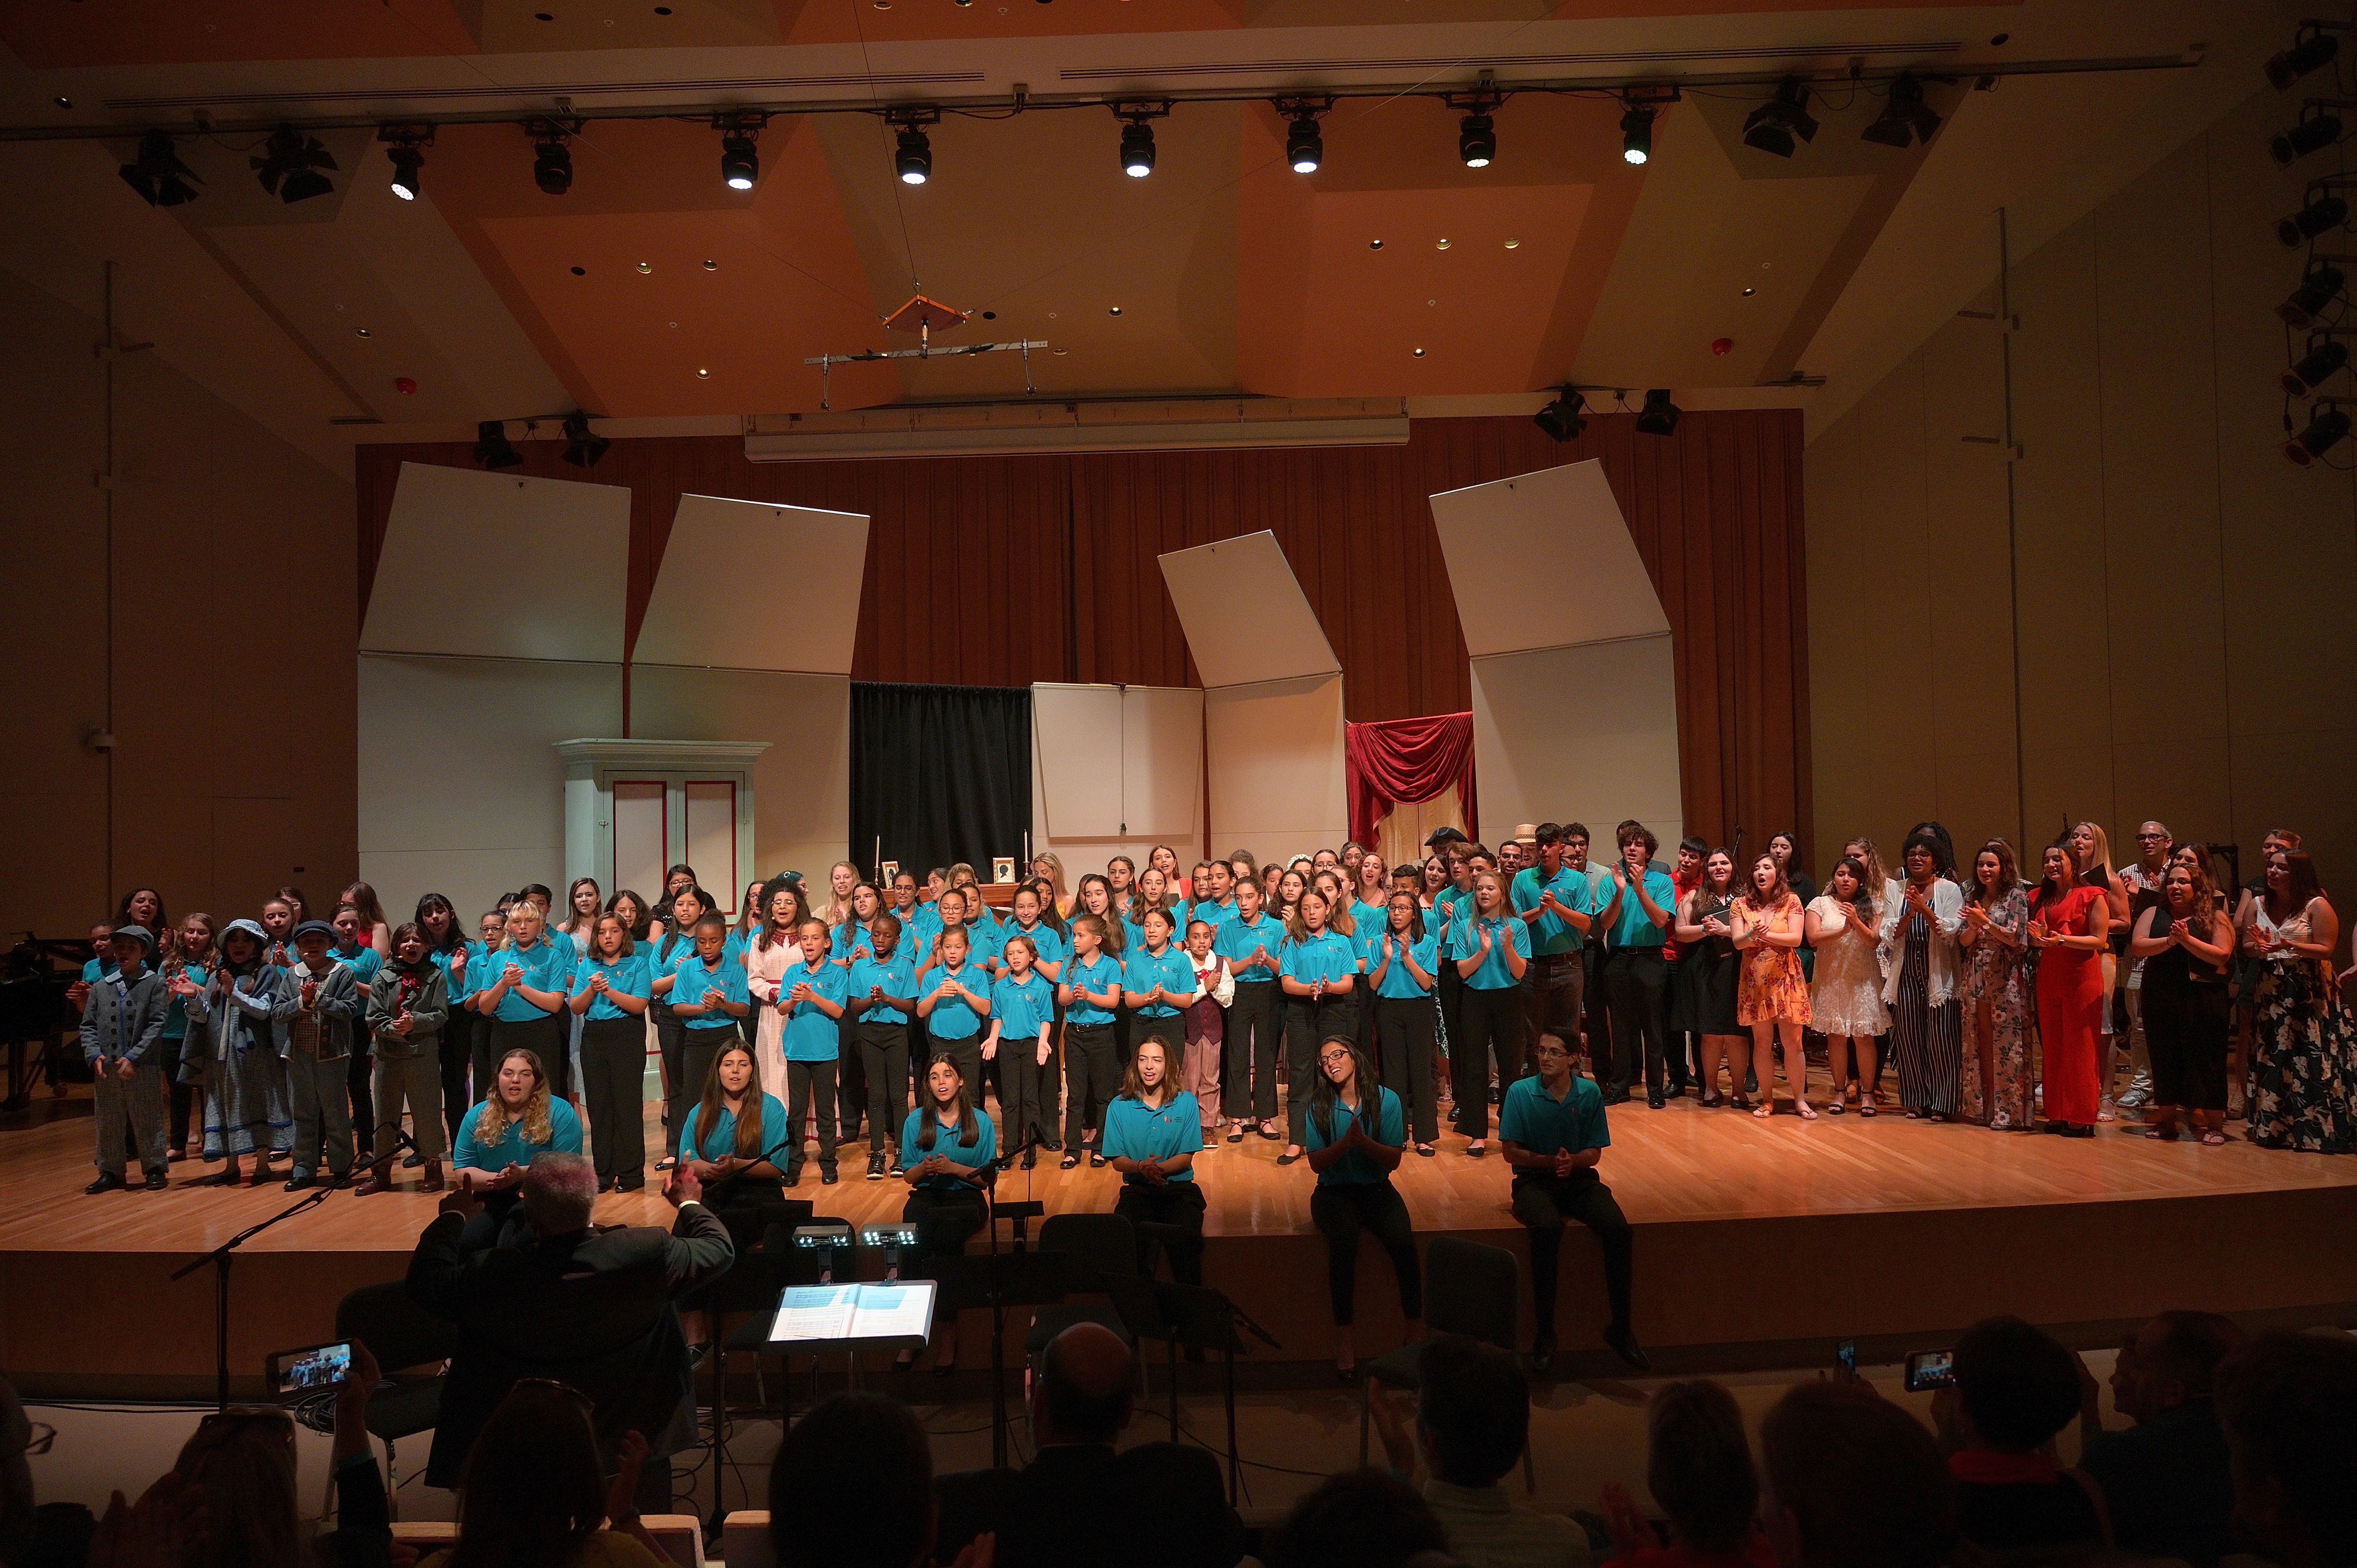 MCC Alumni + Choristers singing Give us Hope